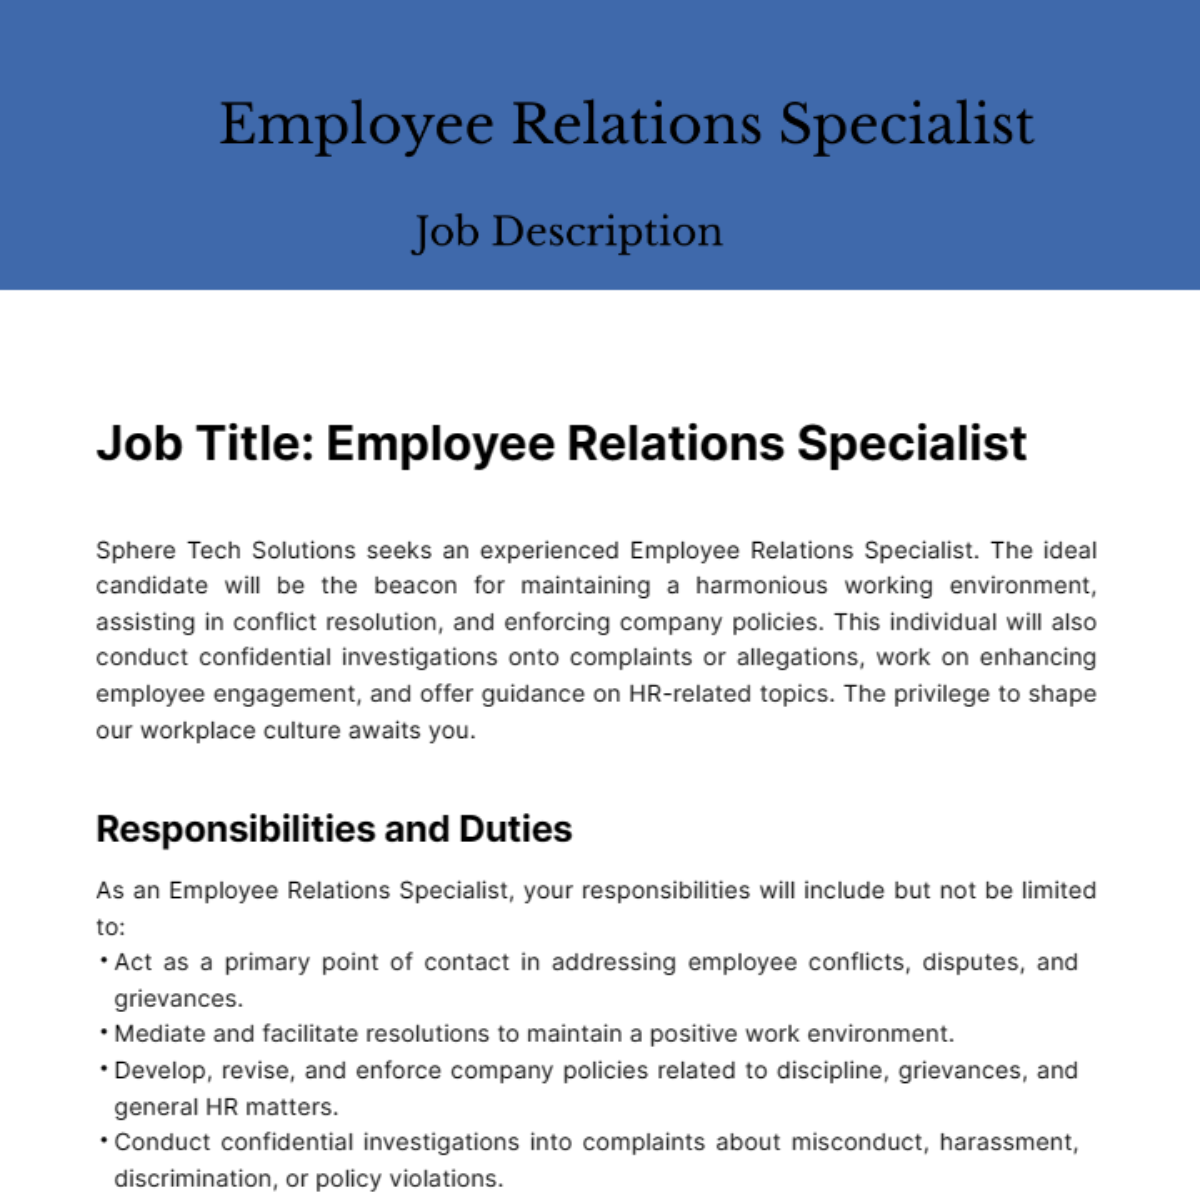 Employee Relations Specialist Job Description Template